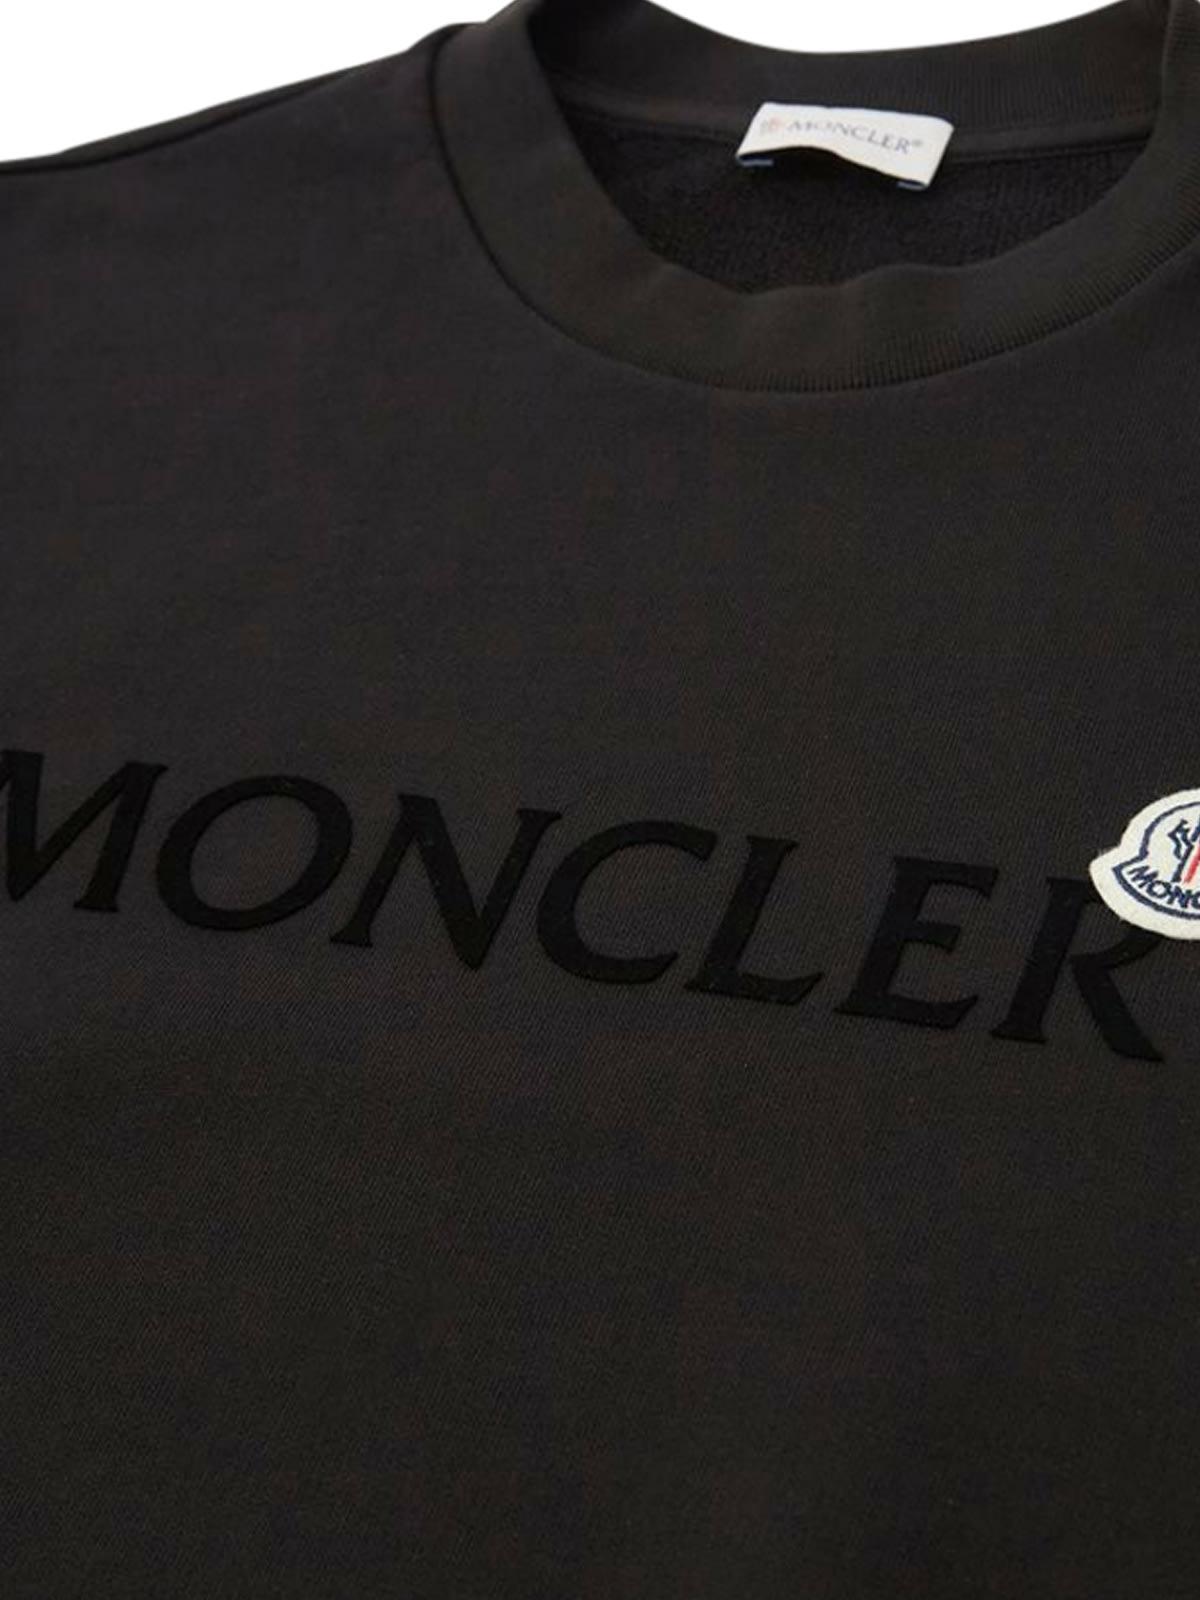 Moncler Cotton Logo Sweat in Nero (Black) for Men - Save 43% | Lyst